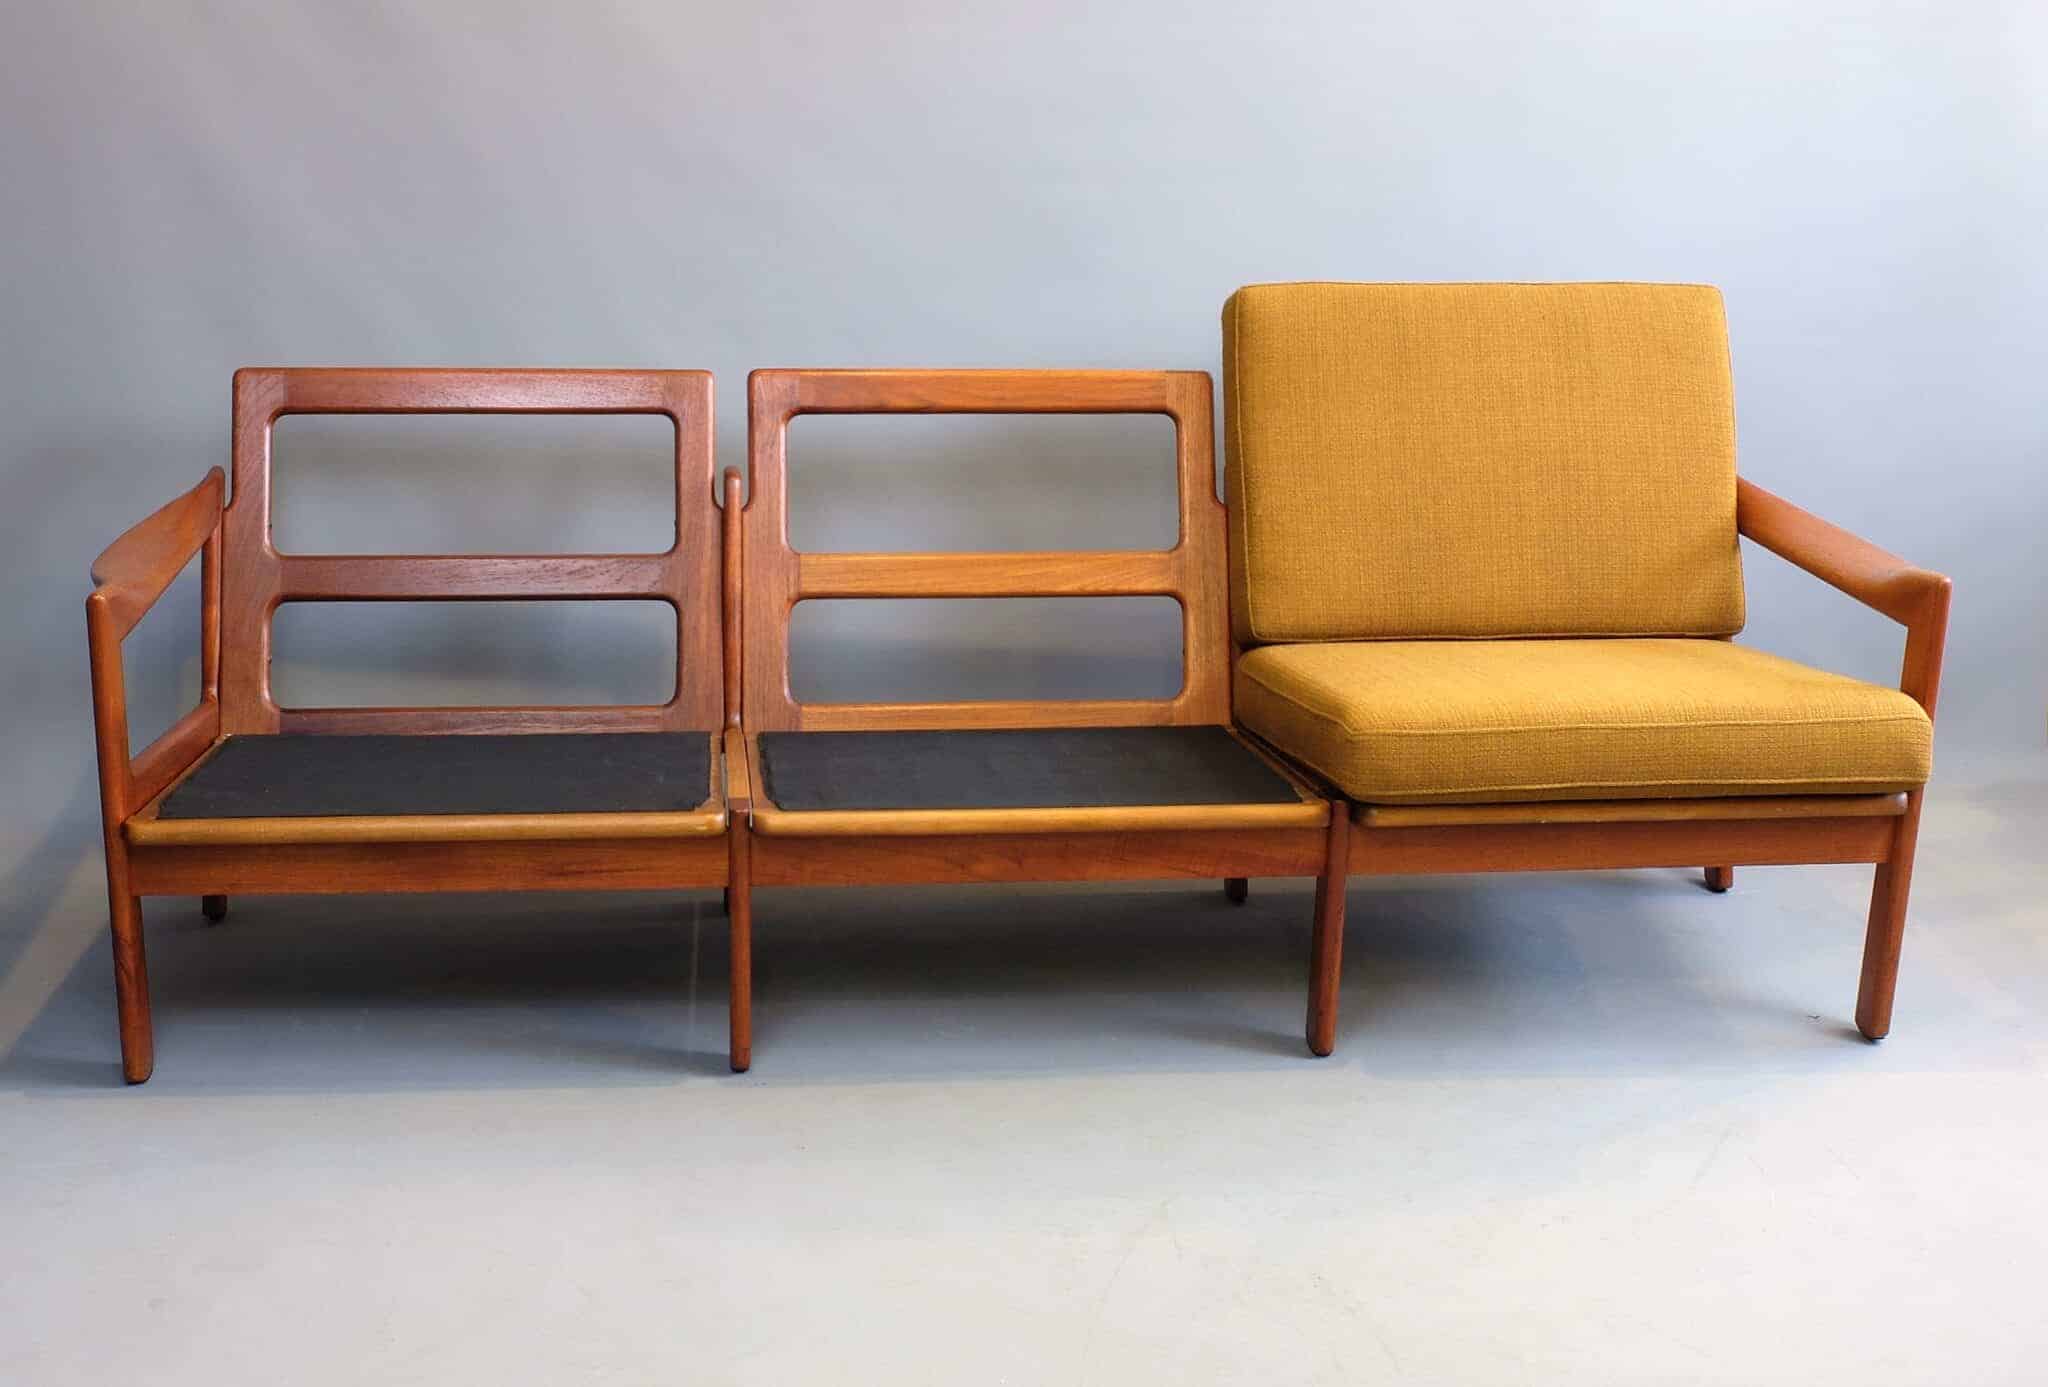 Illum Wikkelso three seat sofa produced by Eilersen, Denmark c1960